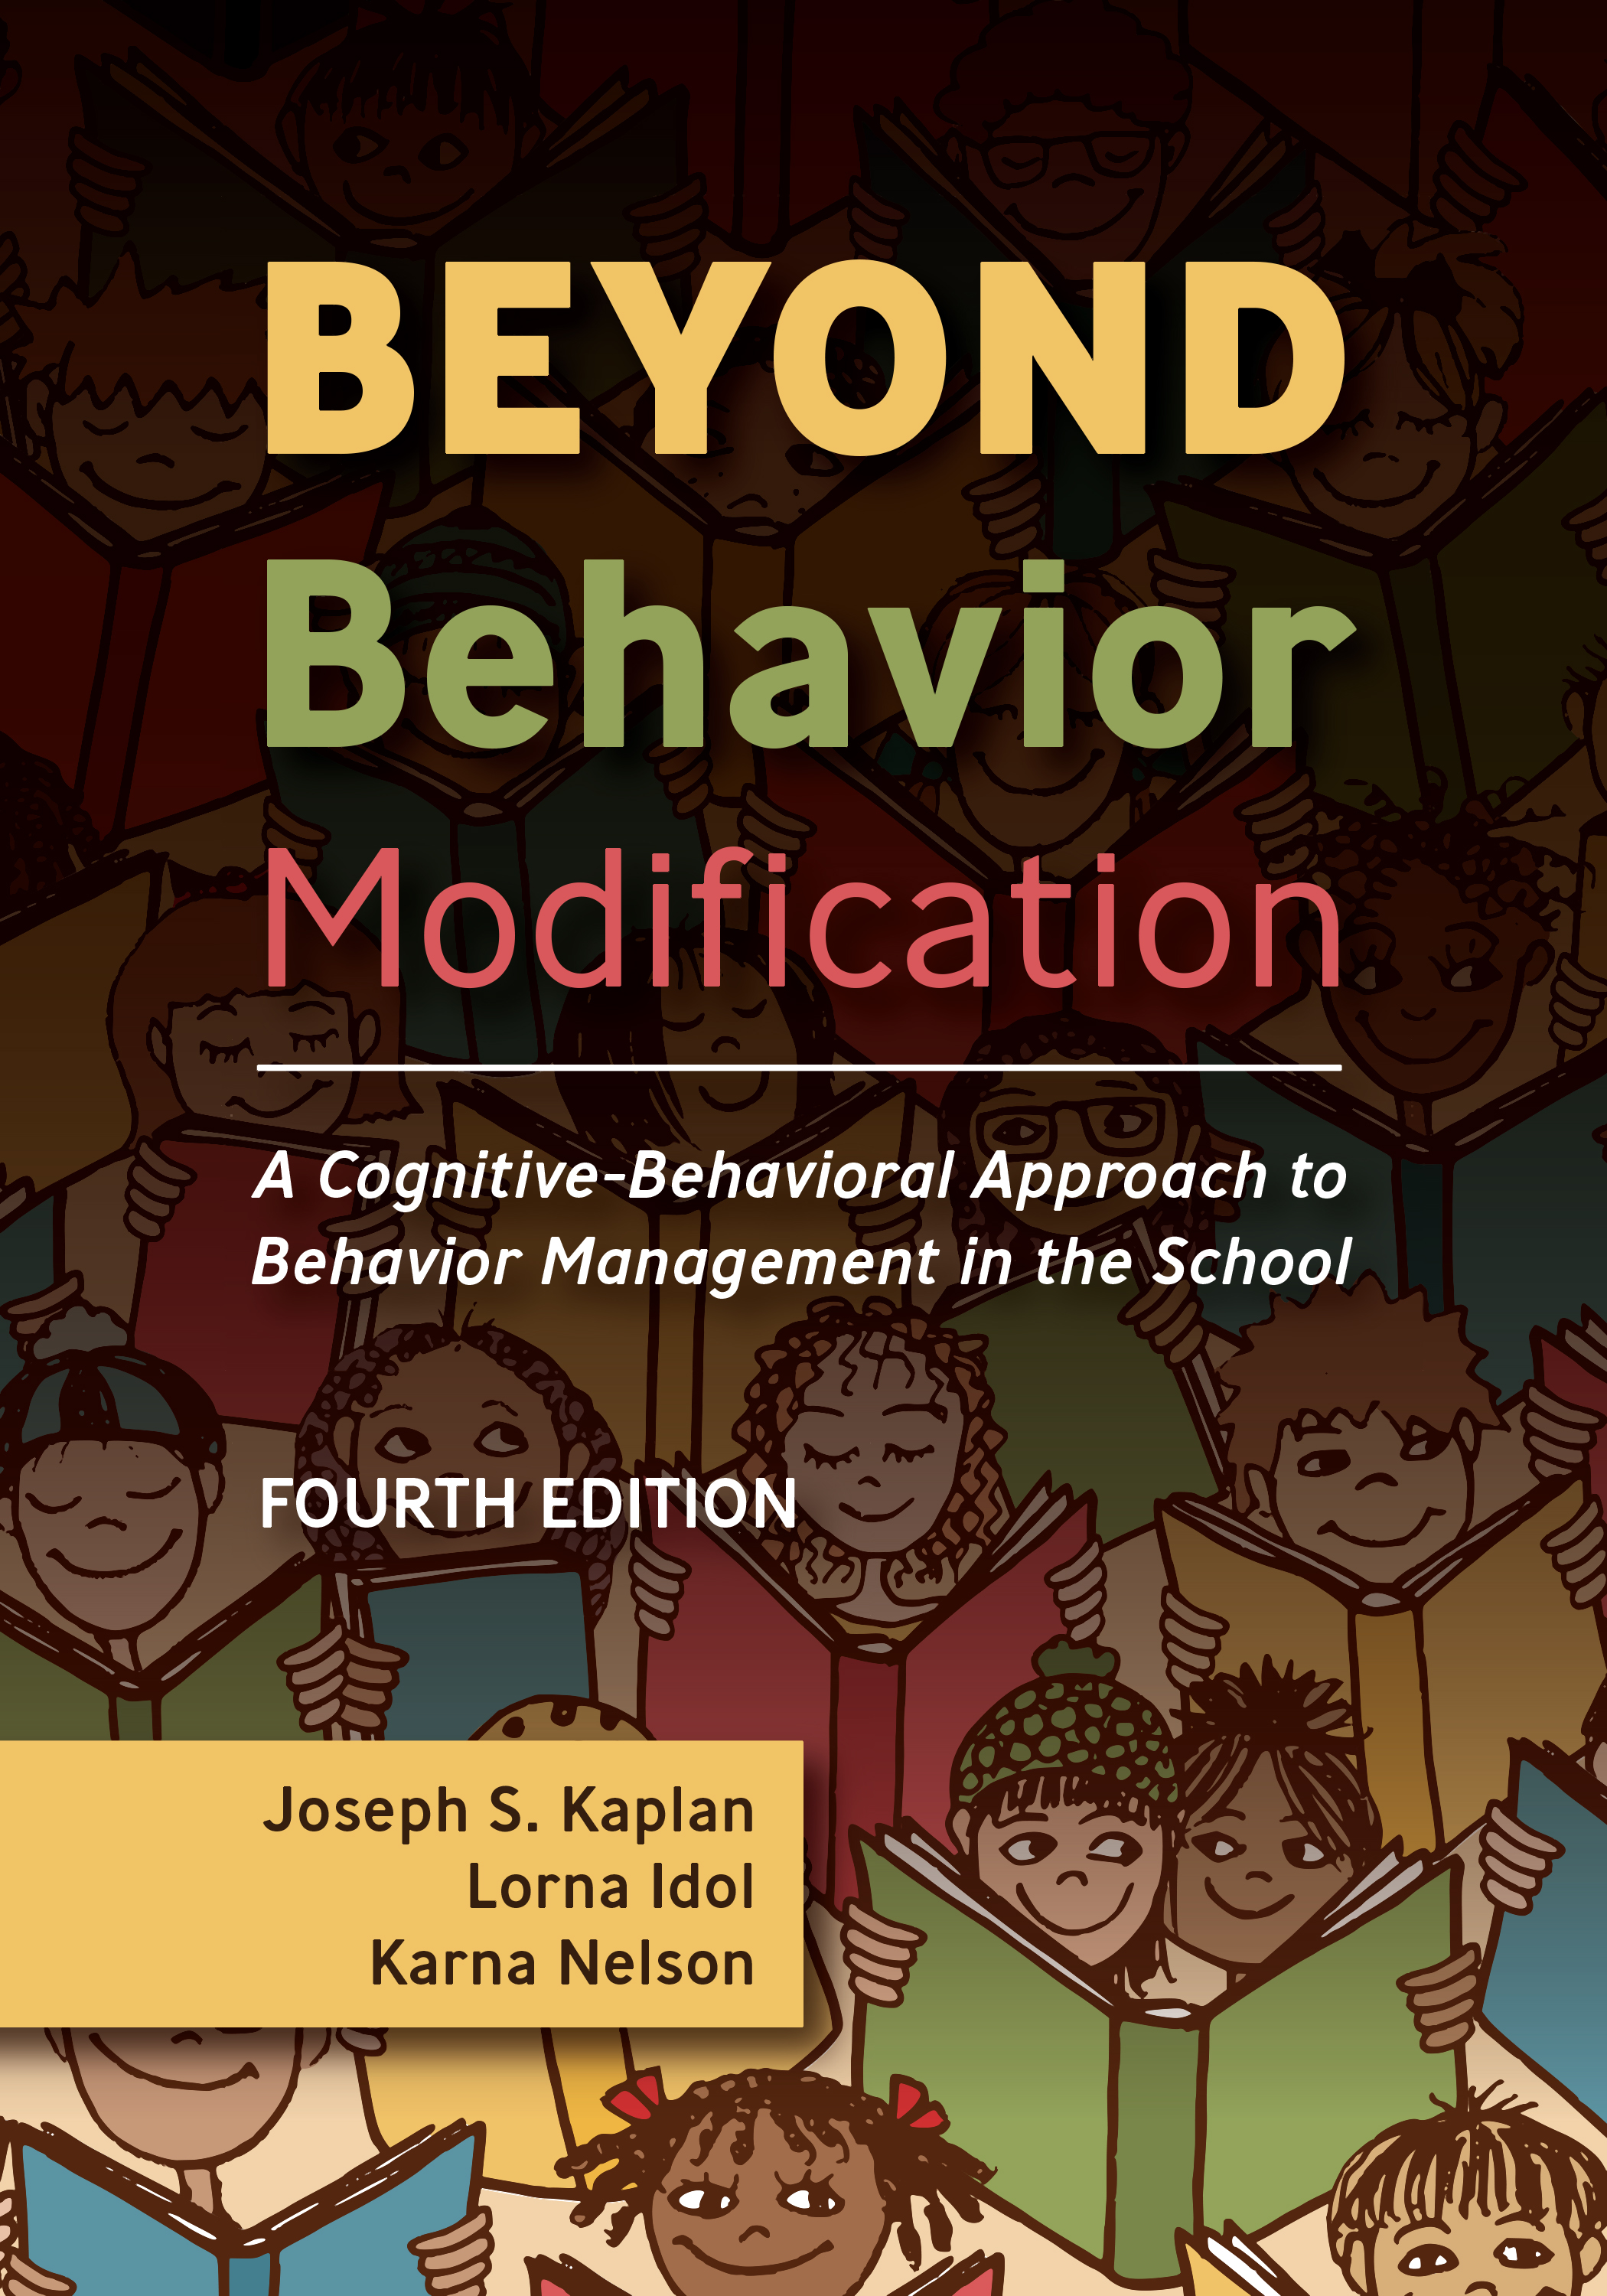 Behavior Modification: Shaping Youth Behavior